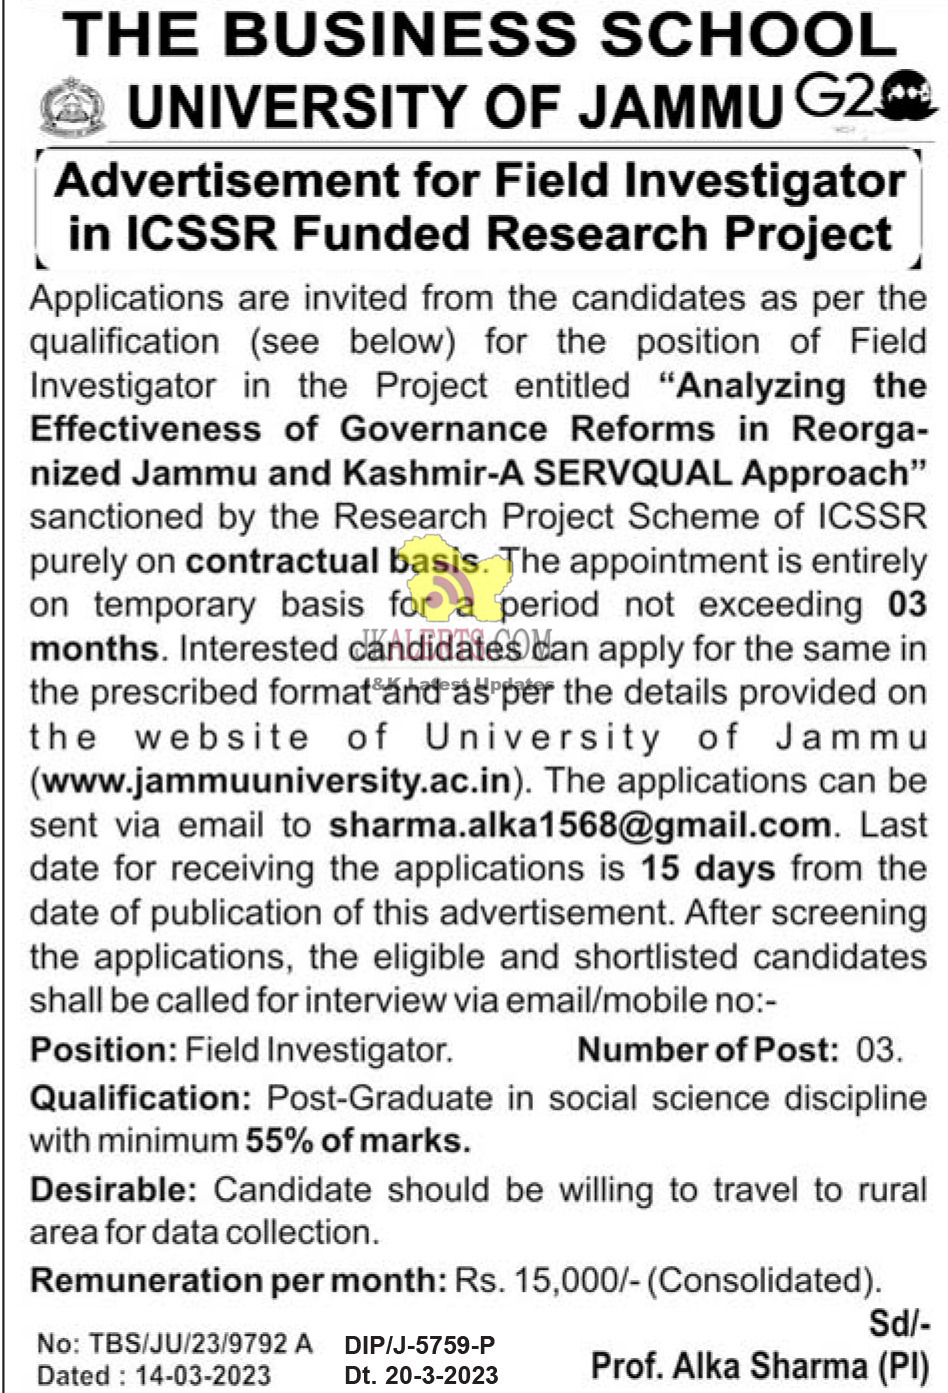 Field Investigator Job in Jammu University.